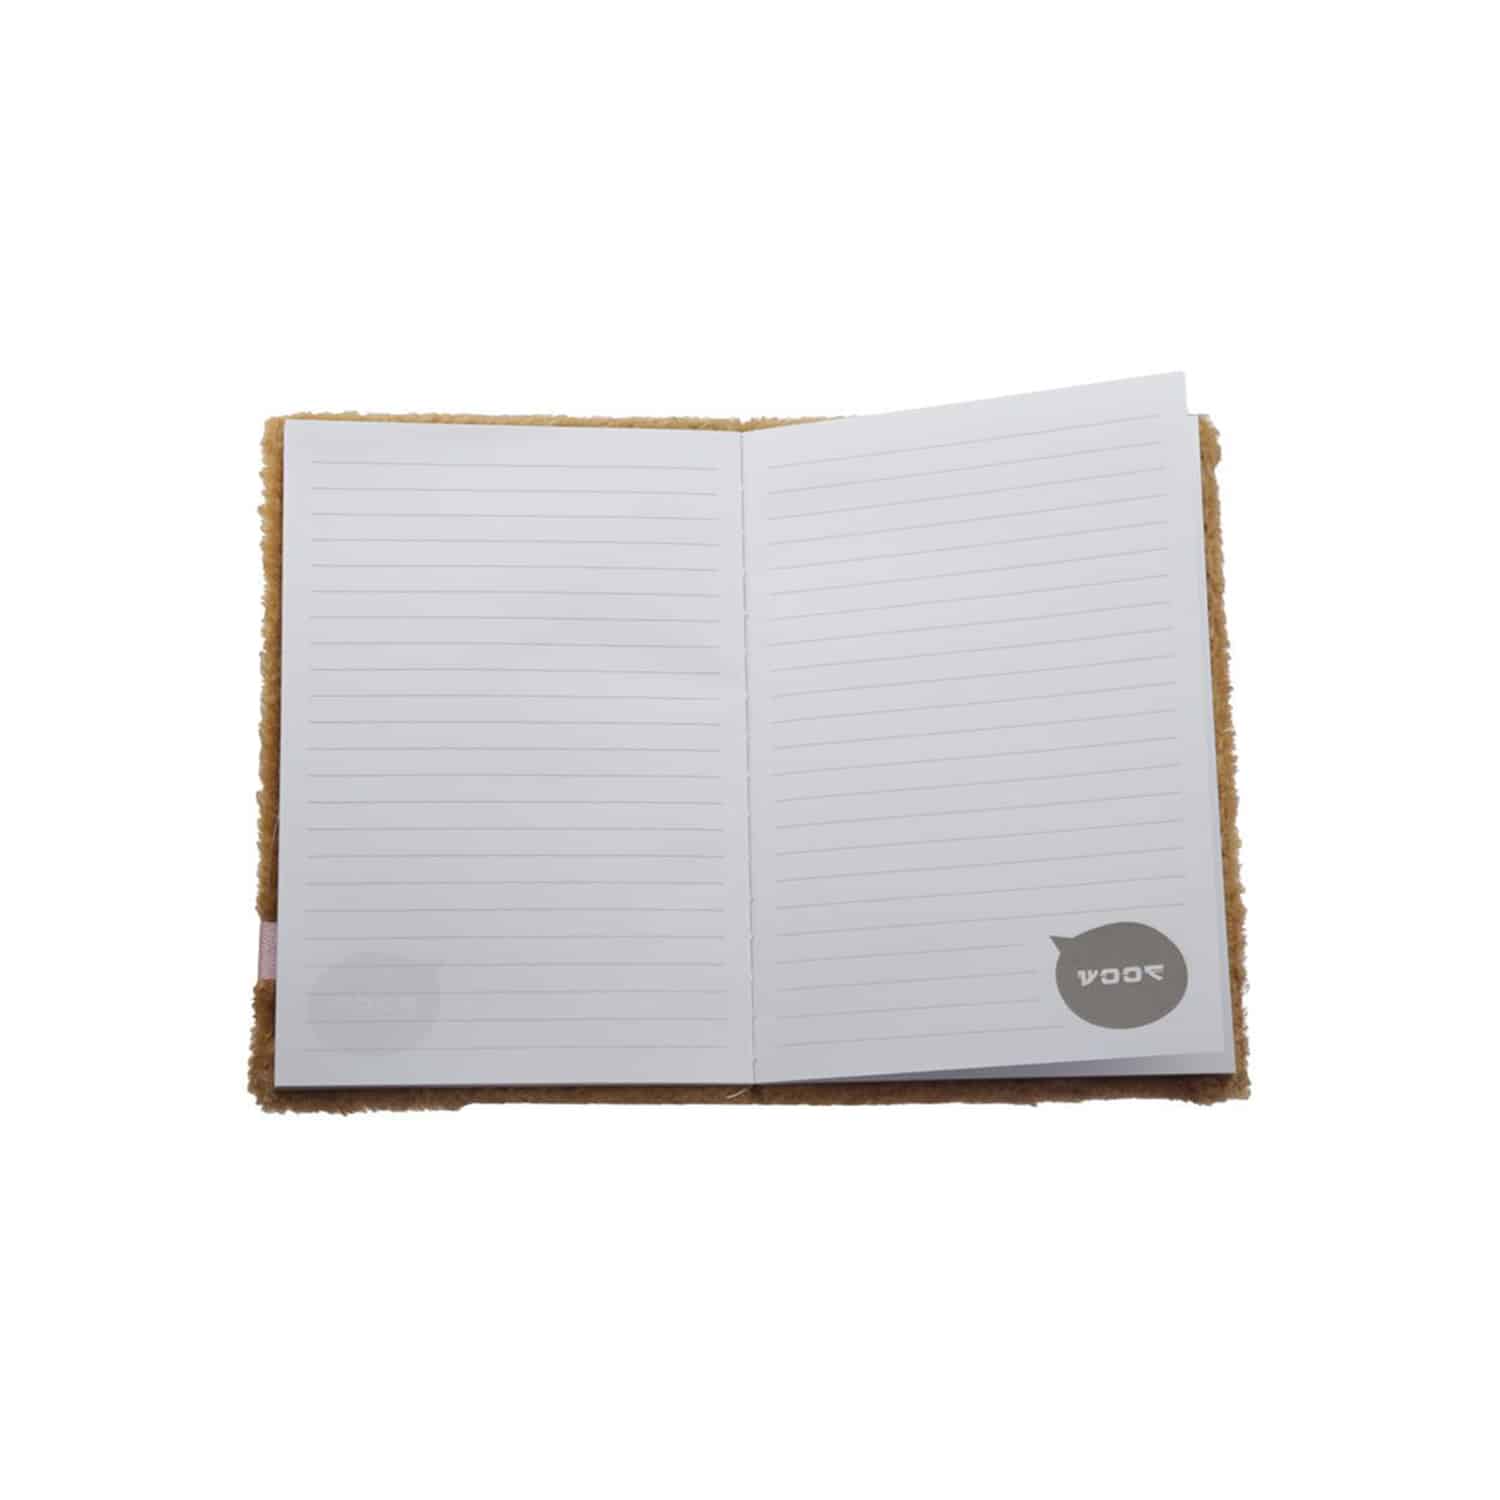 Cutiemals - Shiba Inu Dog  Plush Fluffies Notebook